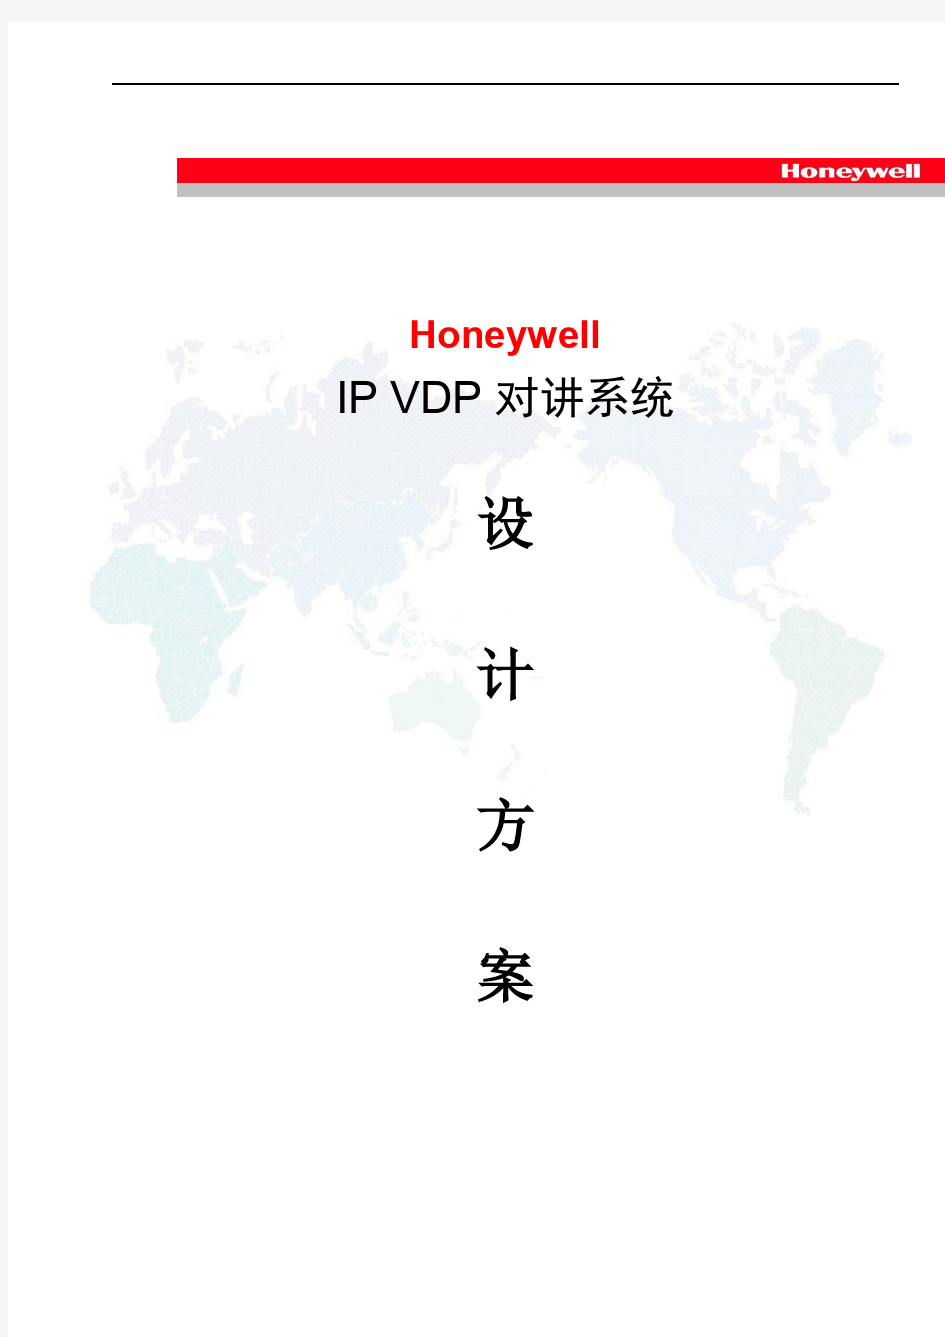 Honeywell IP VDP系统方案说明-IS-4500J